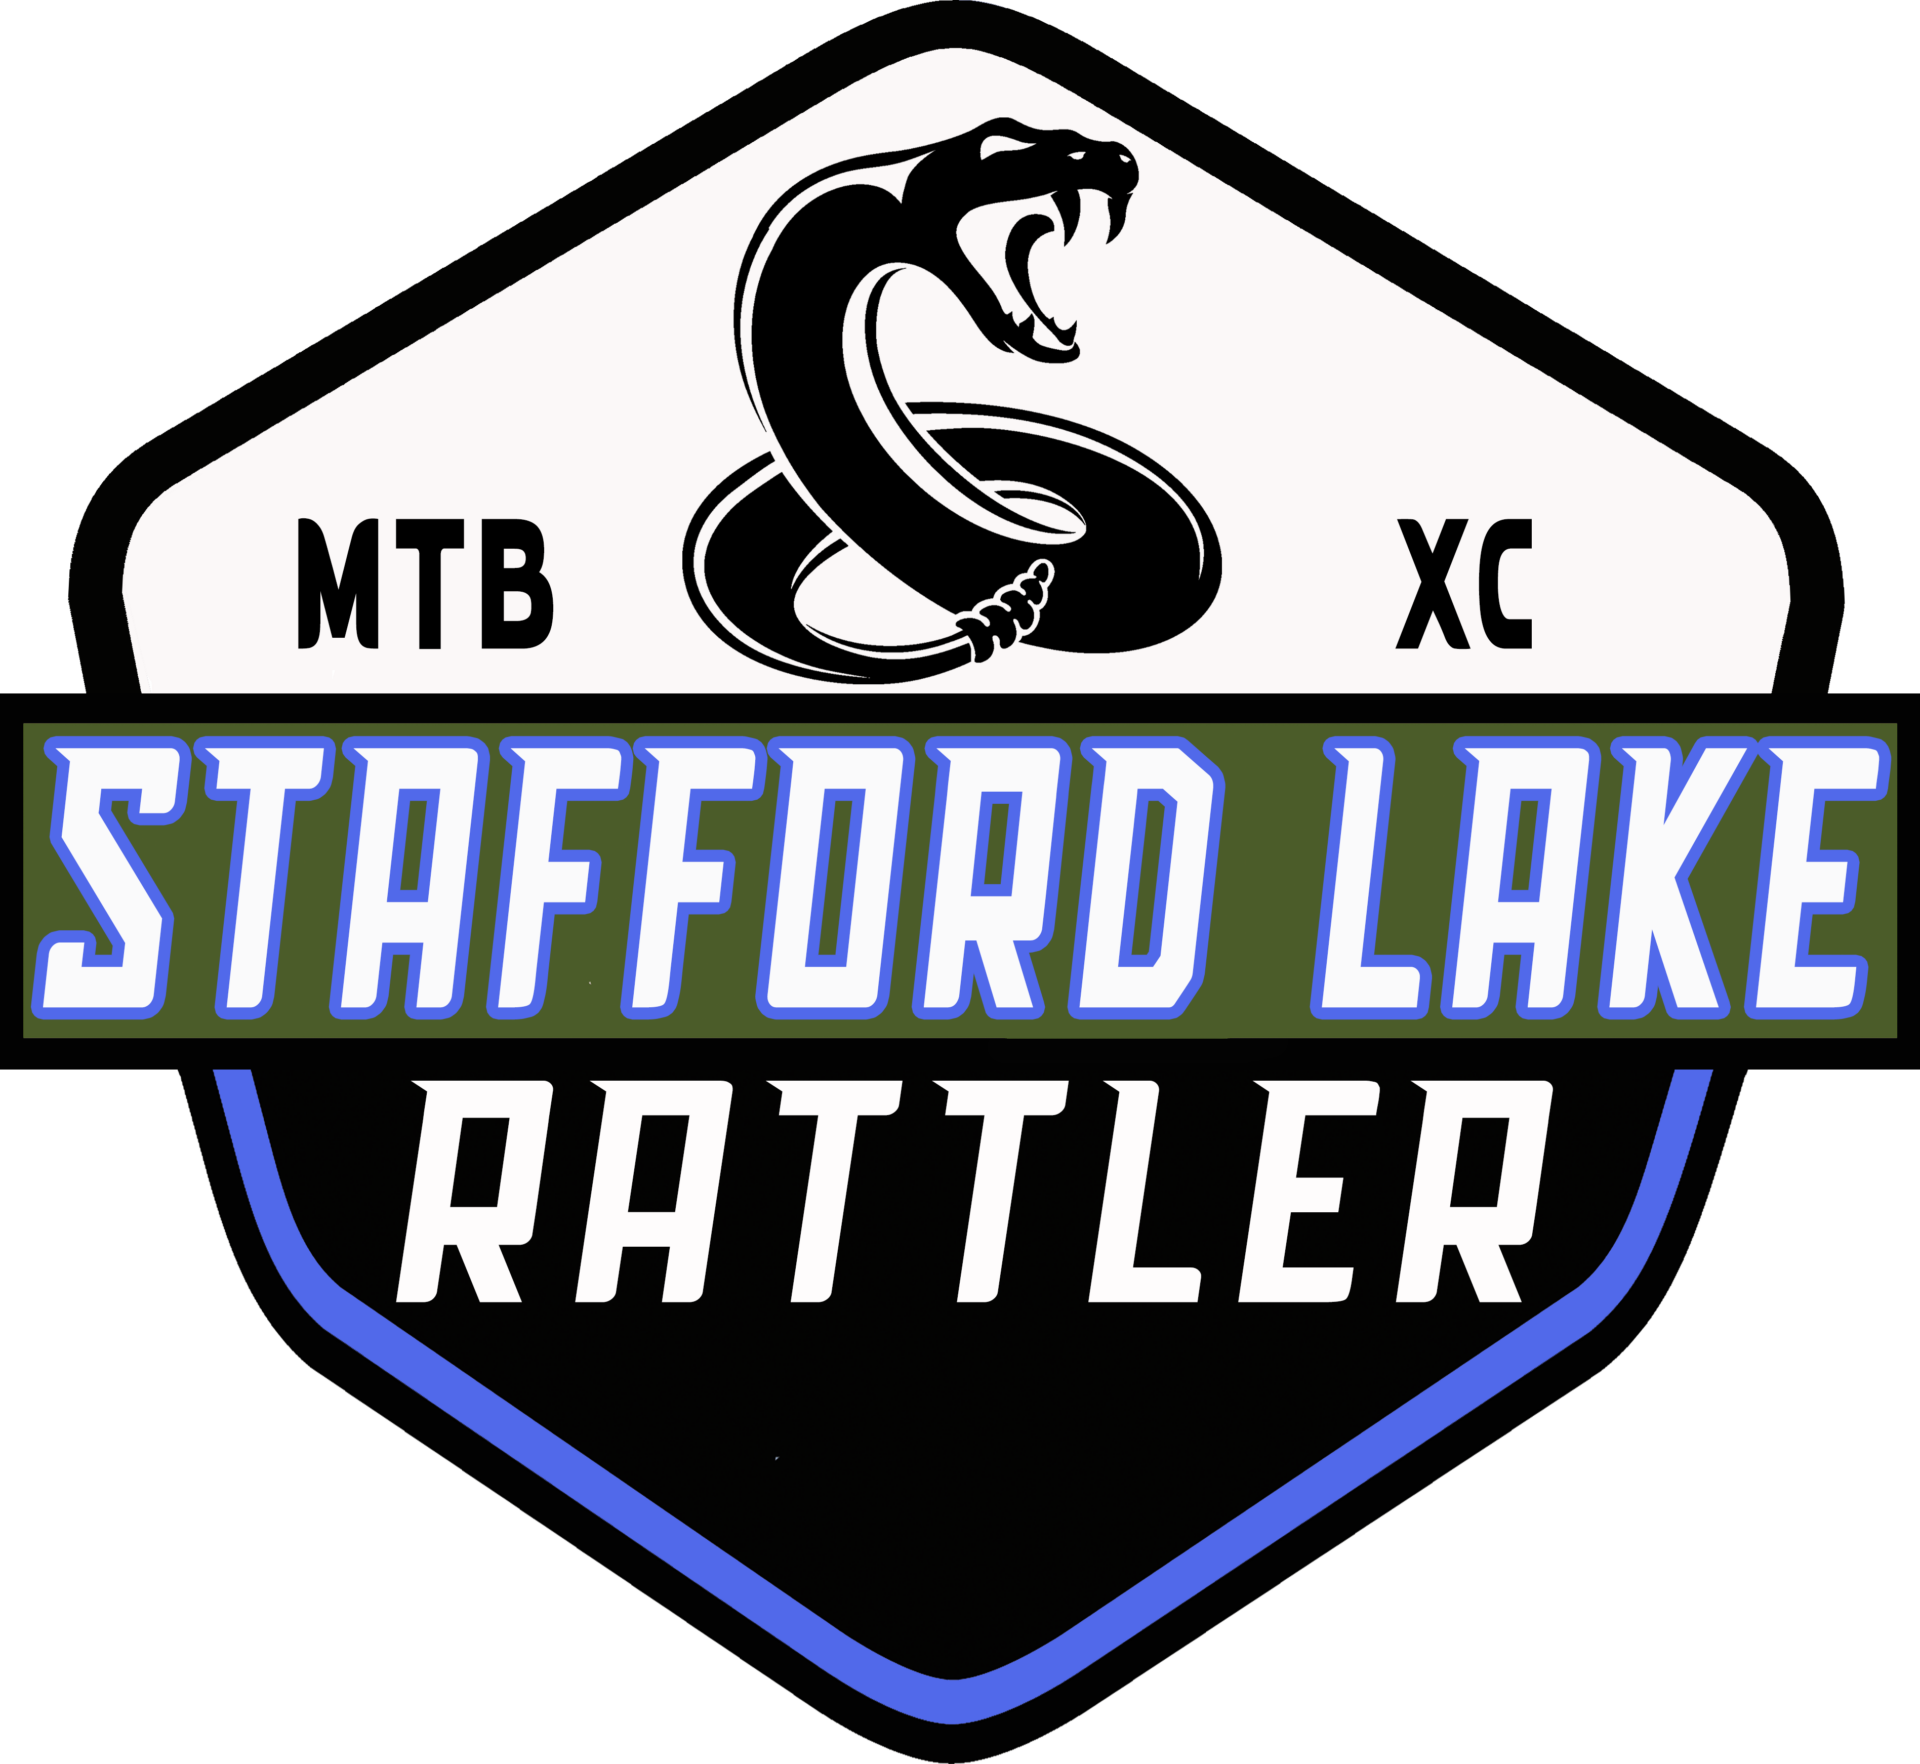 Stafford Lake Rattler XC Race Logo